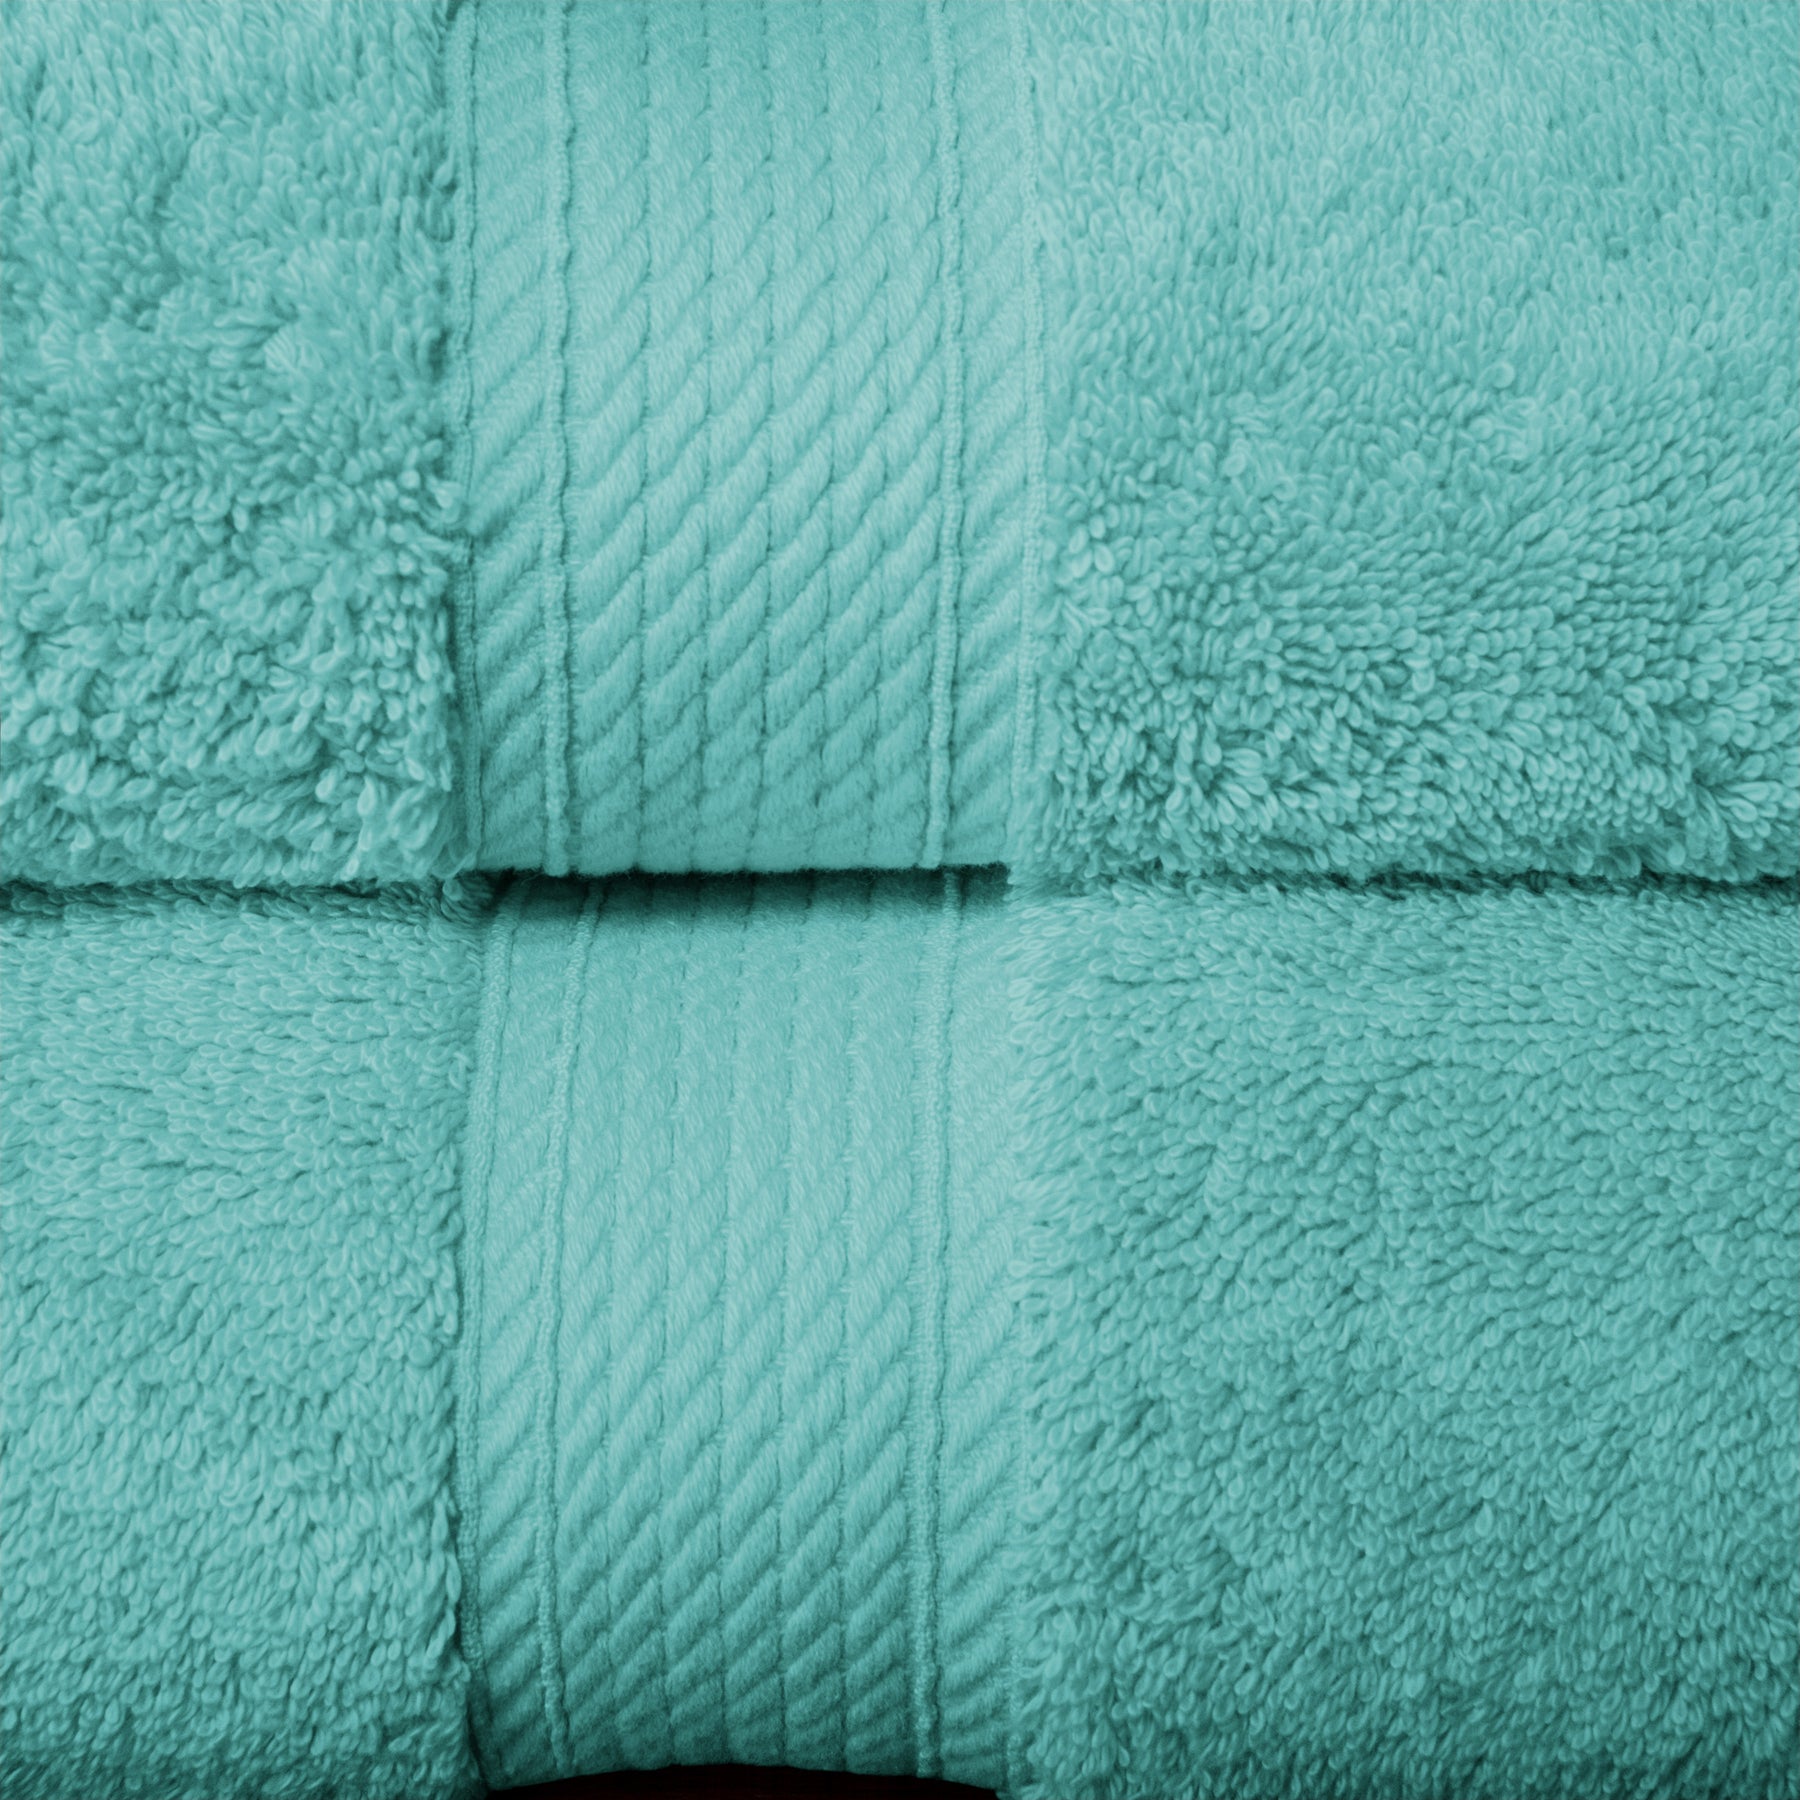 Egyptian Cotton Heavyweight 2 Piece Bath Towel Set - Turquoise